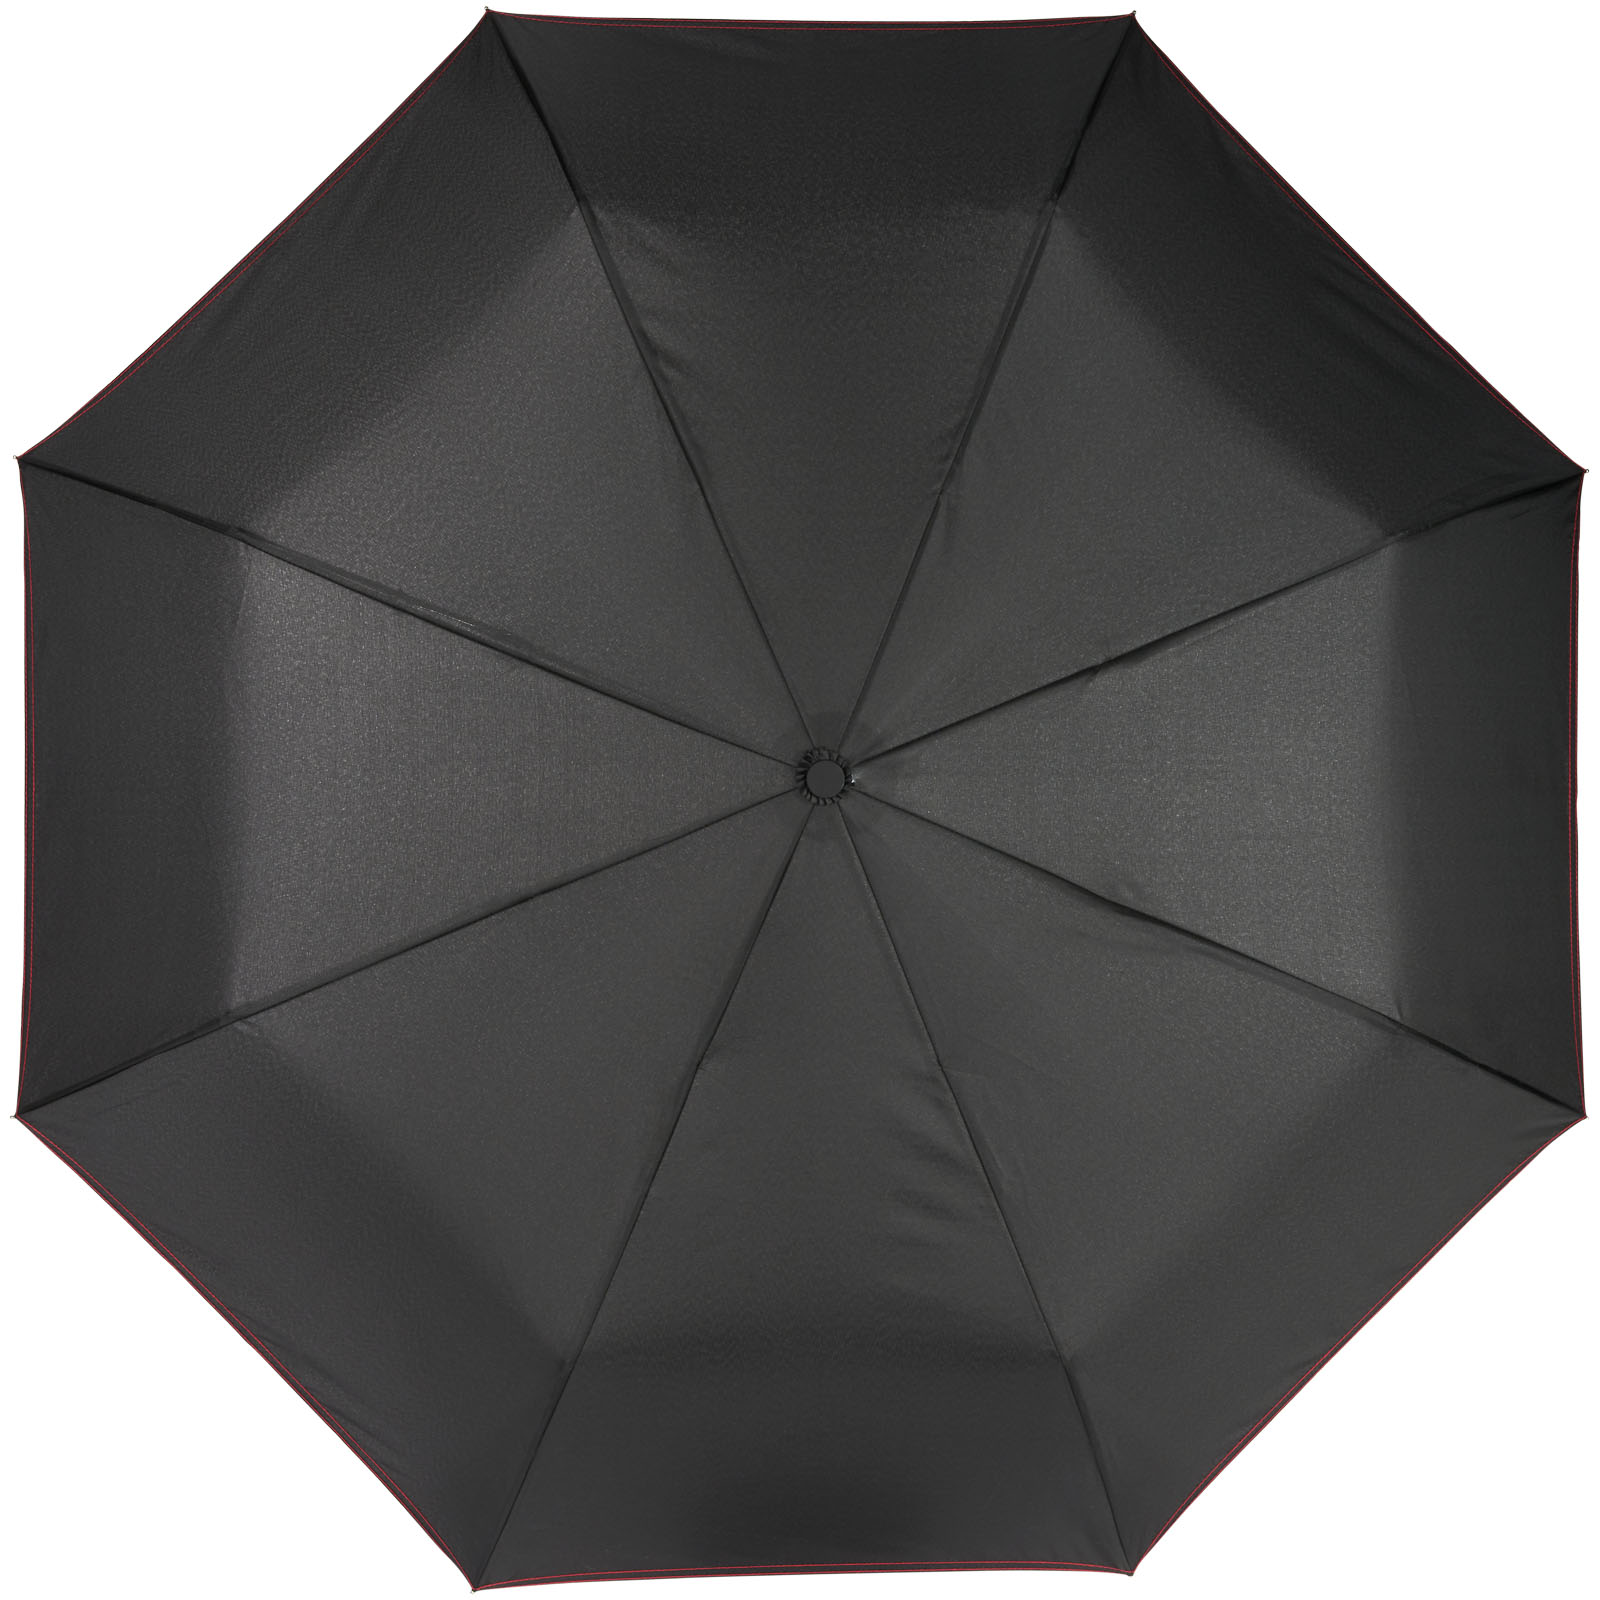 Advertising Folding Umbrellas - Stark-mini 21